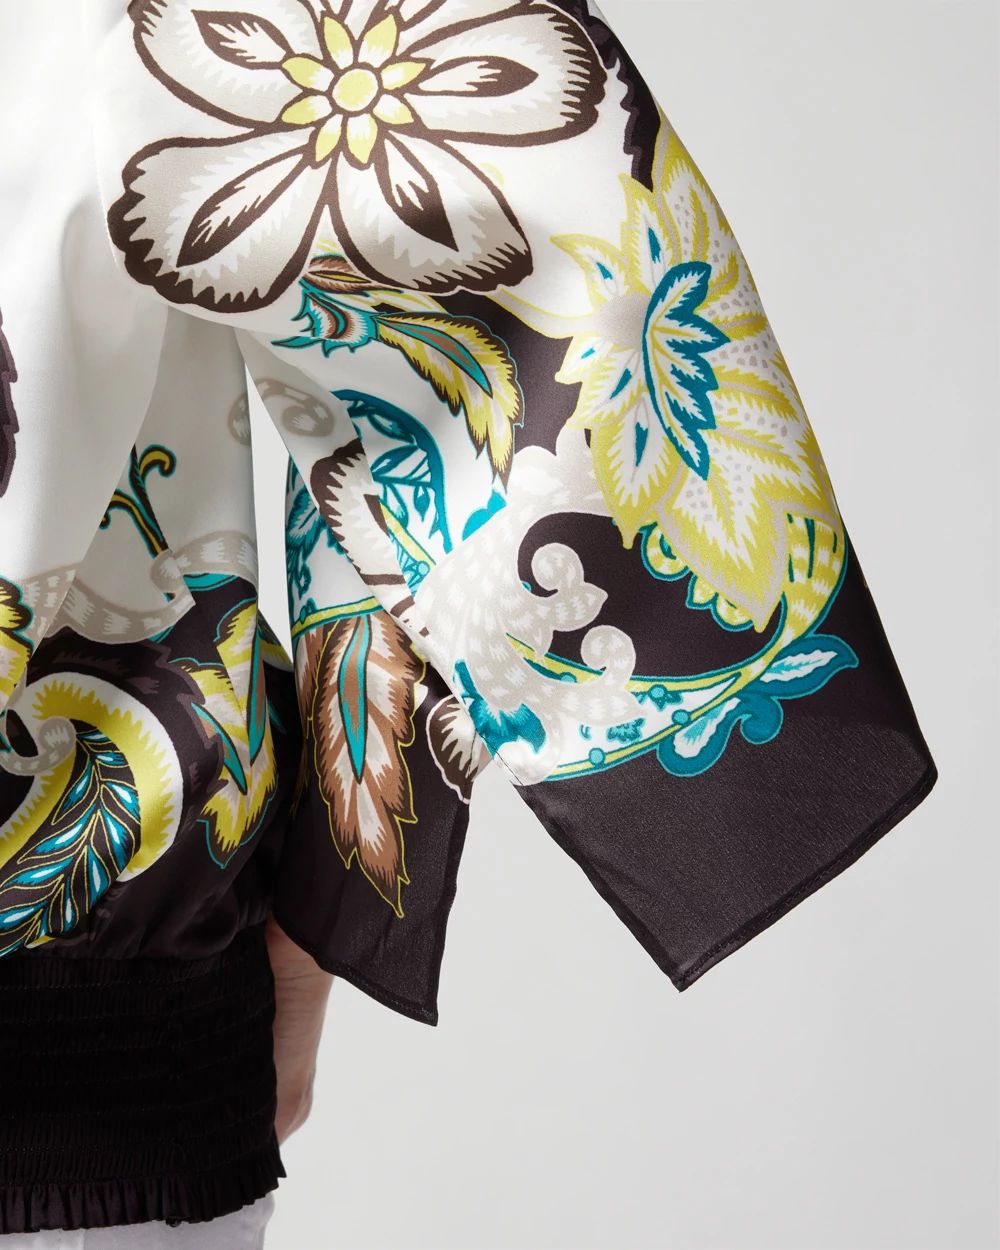 Kimono Sleeve Blouse click to view larger image.